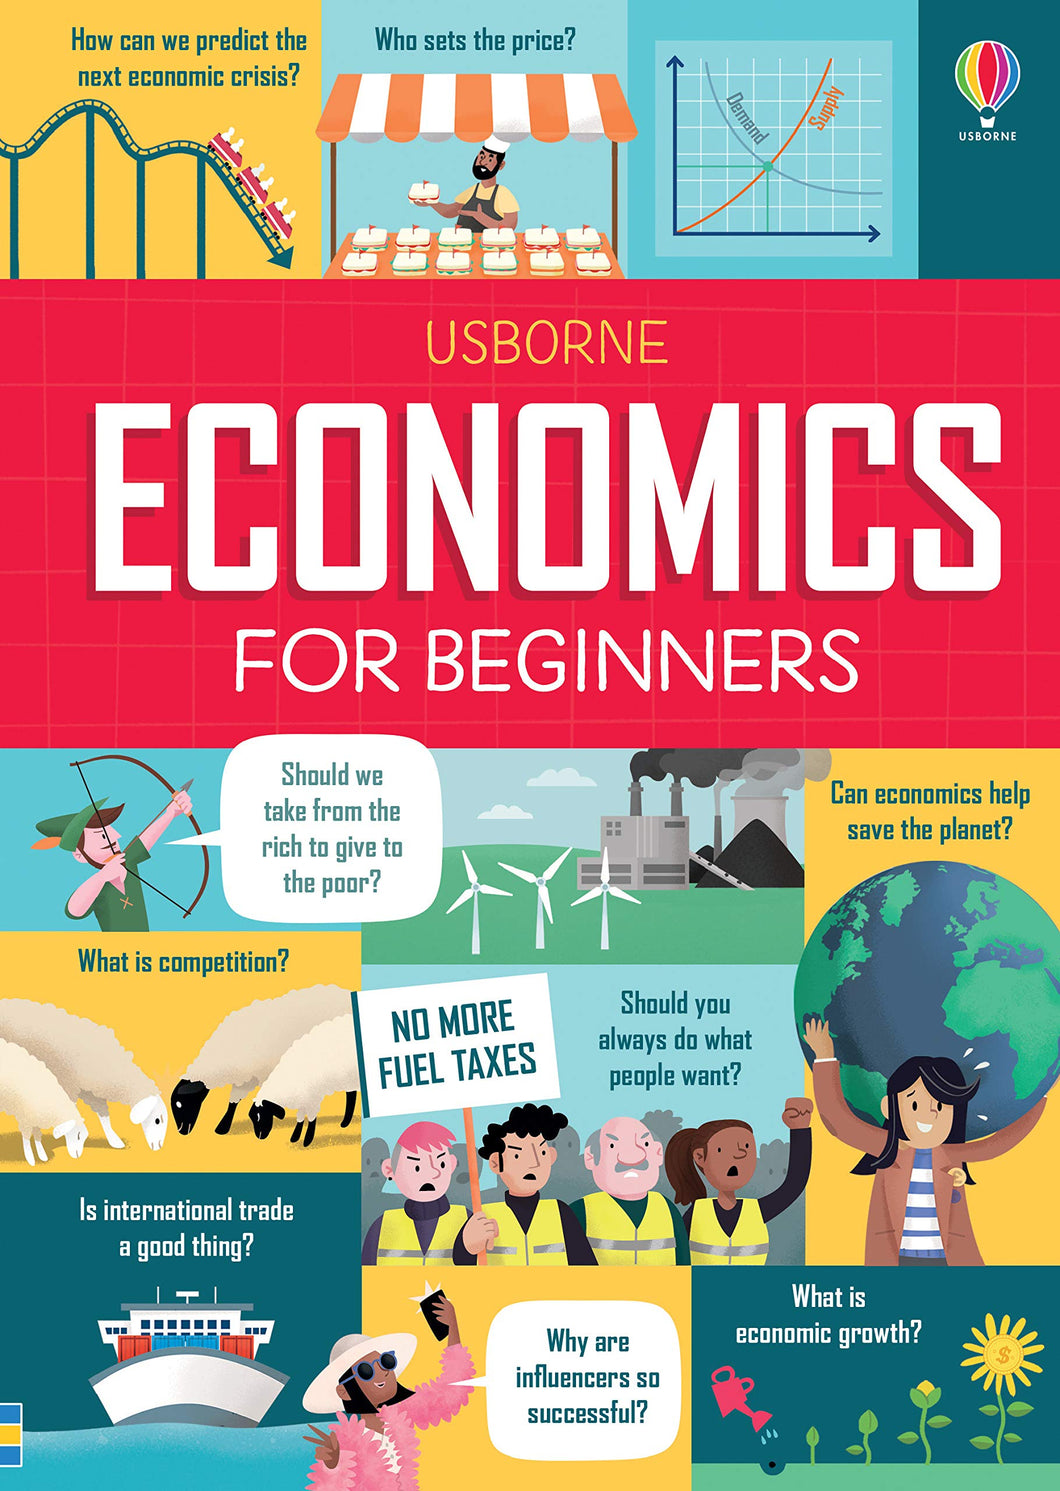 Economics for Beginners